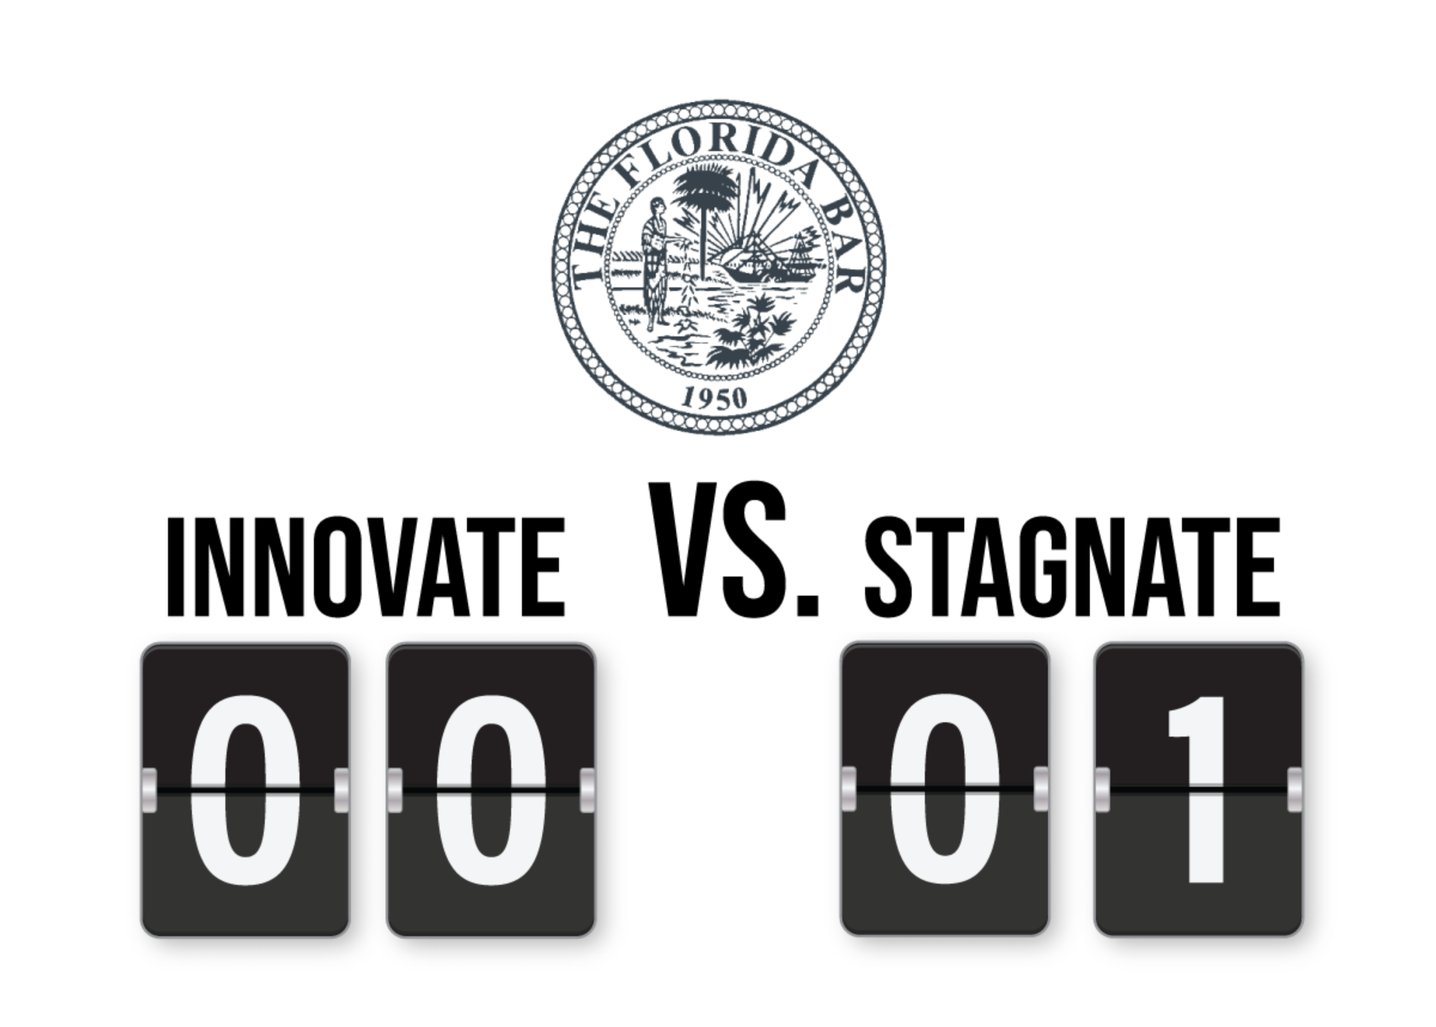 Innovate-vs-stagnate-revised-3-wide-2